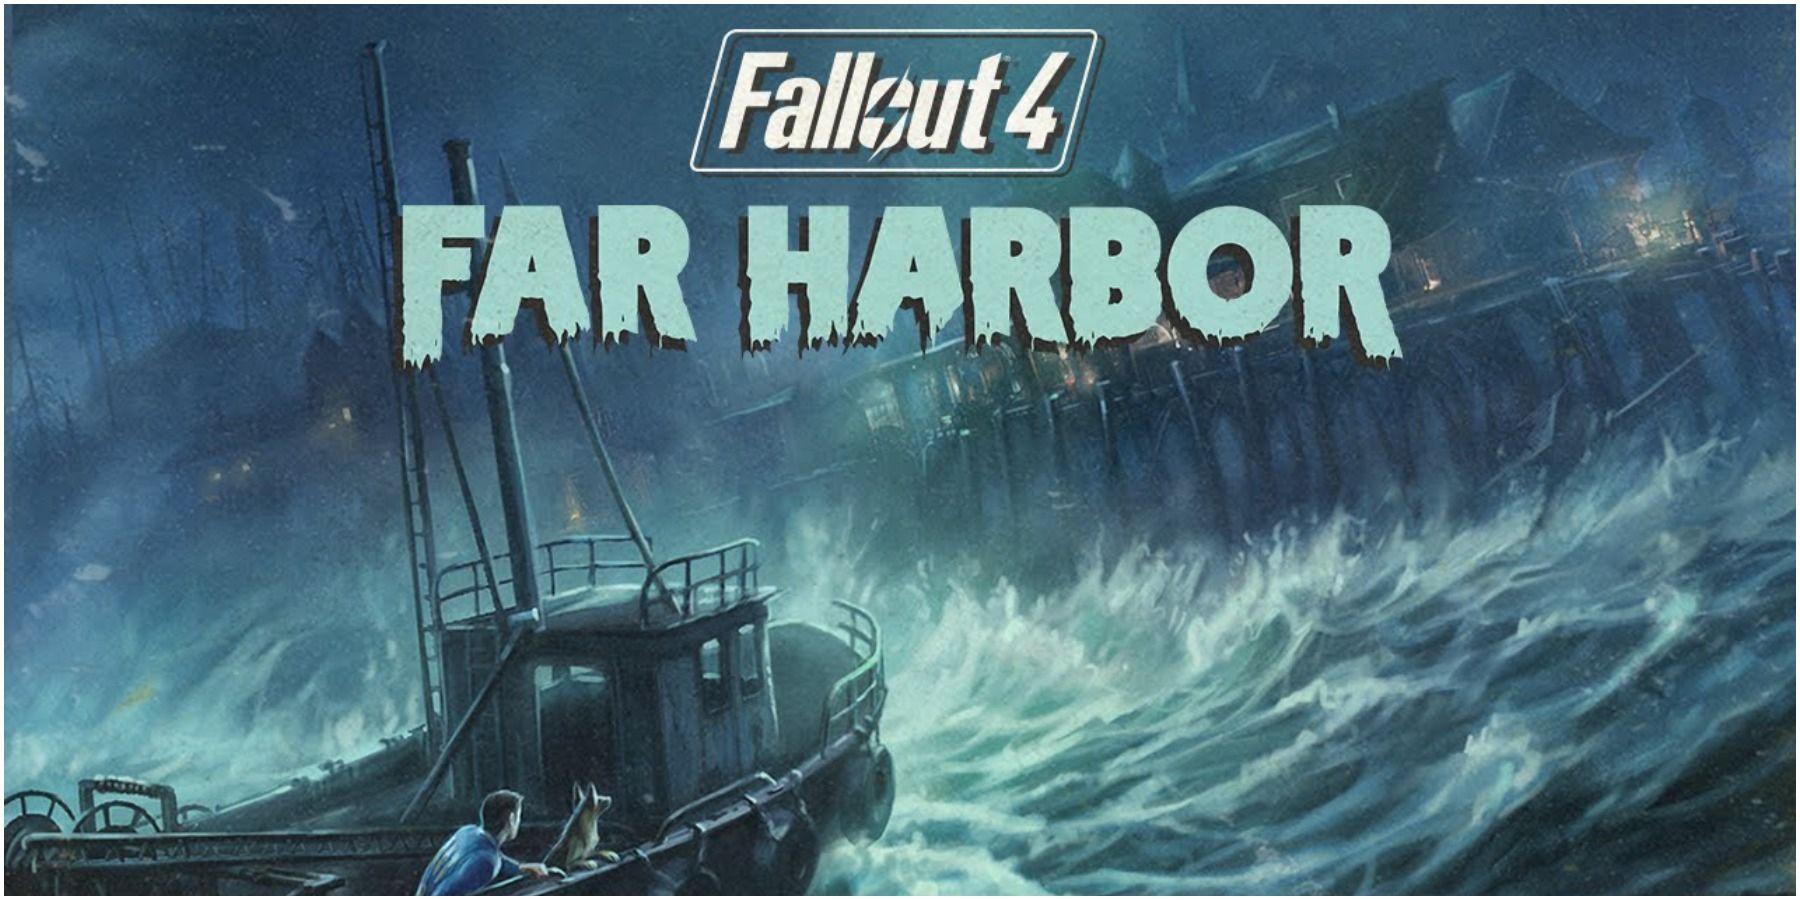 Far Harbor game poster.